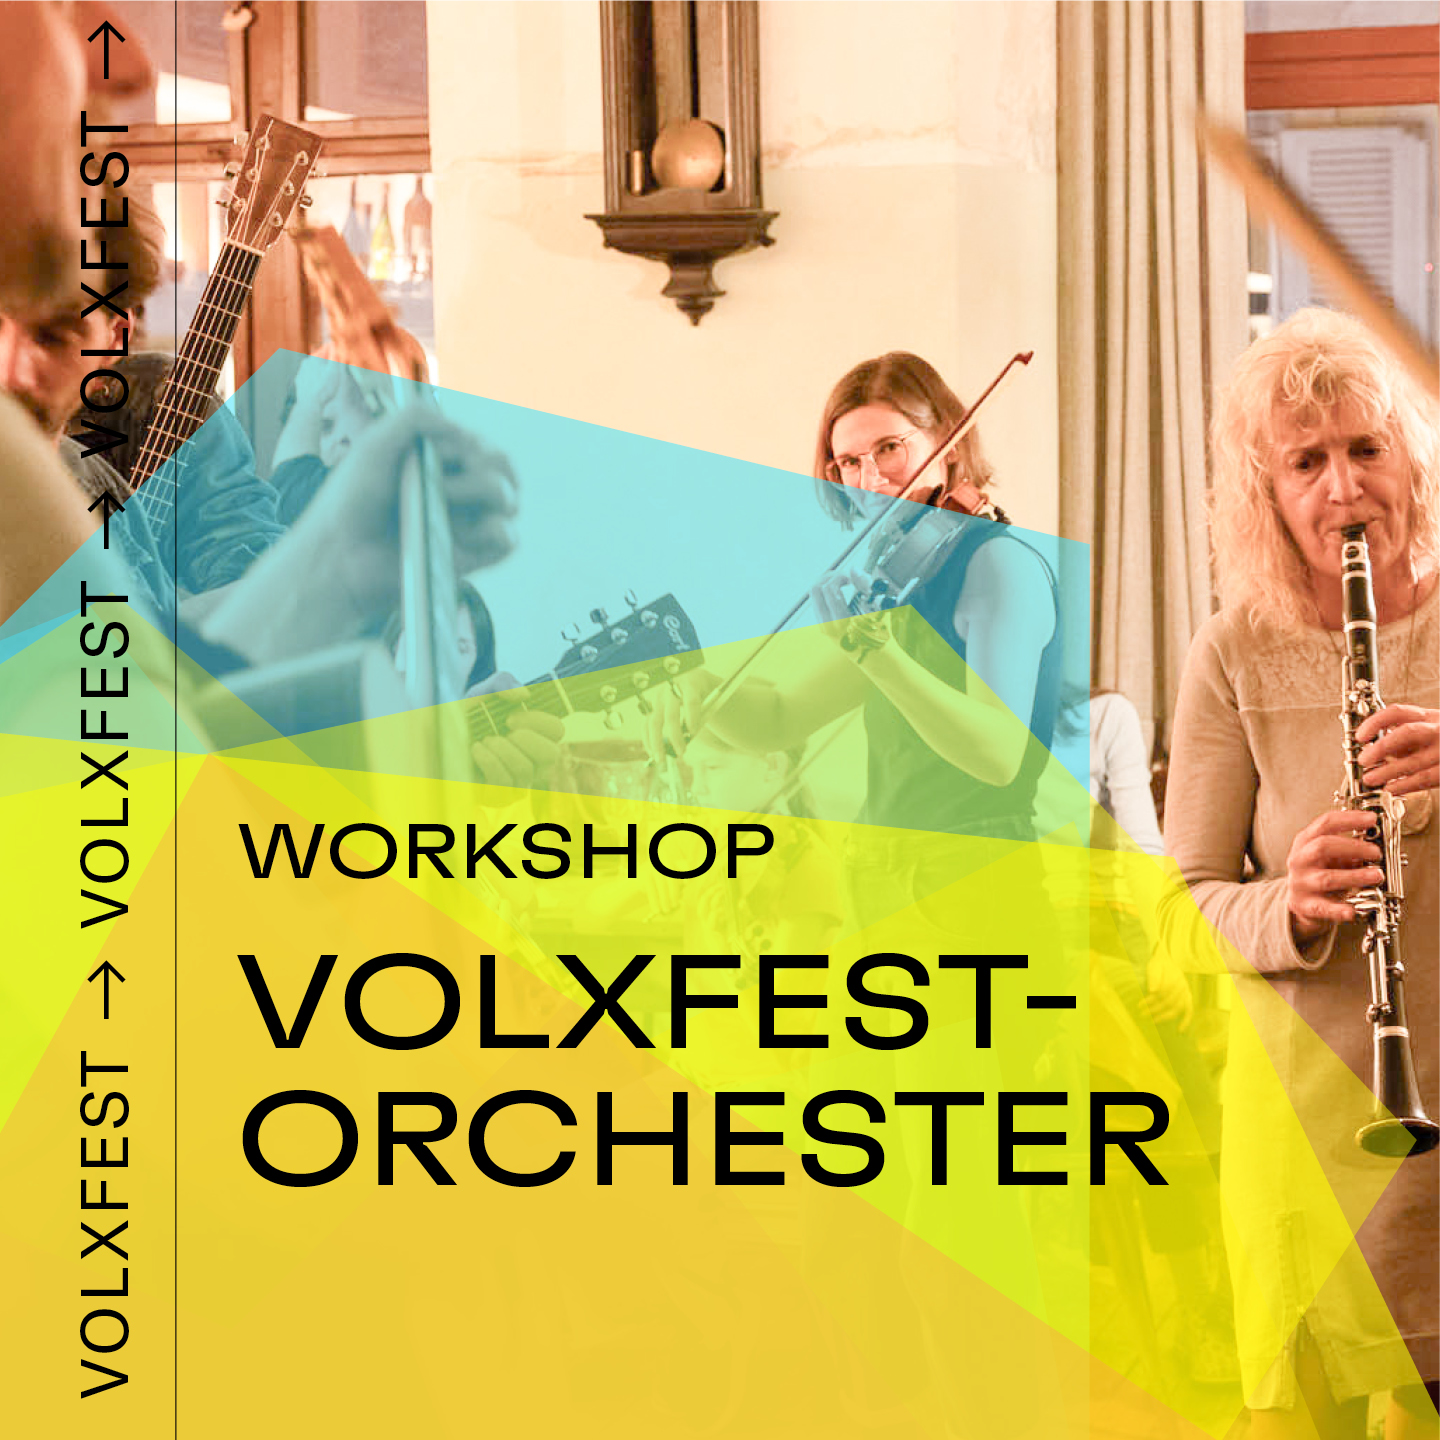 Workshop Volxfest Orchester